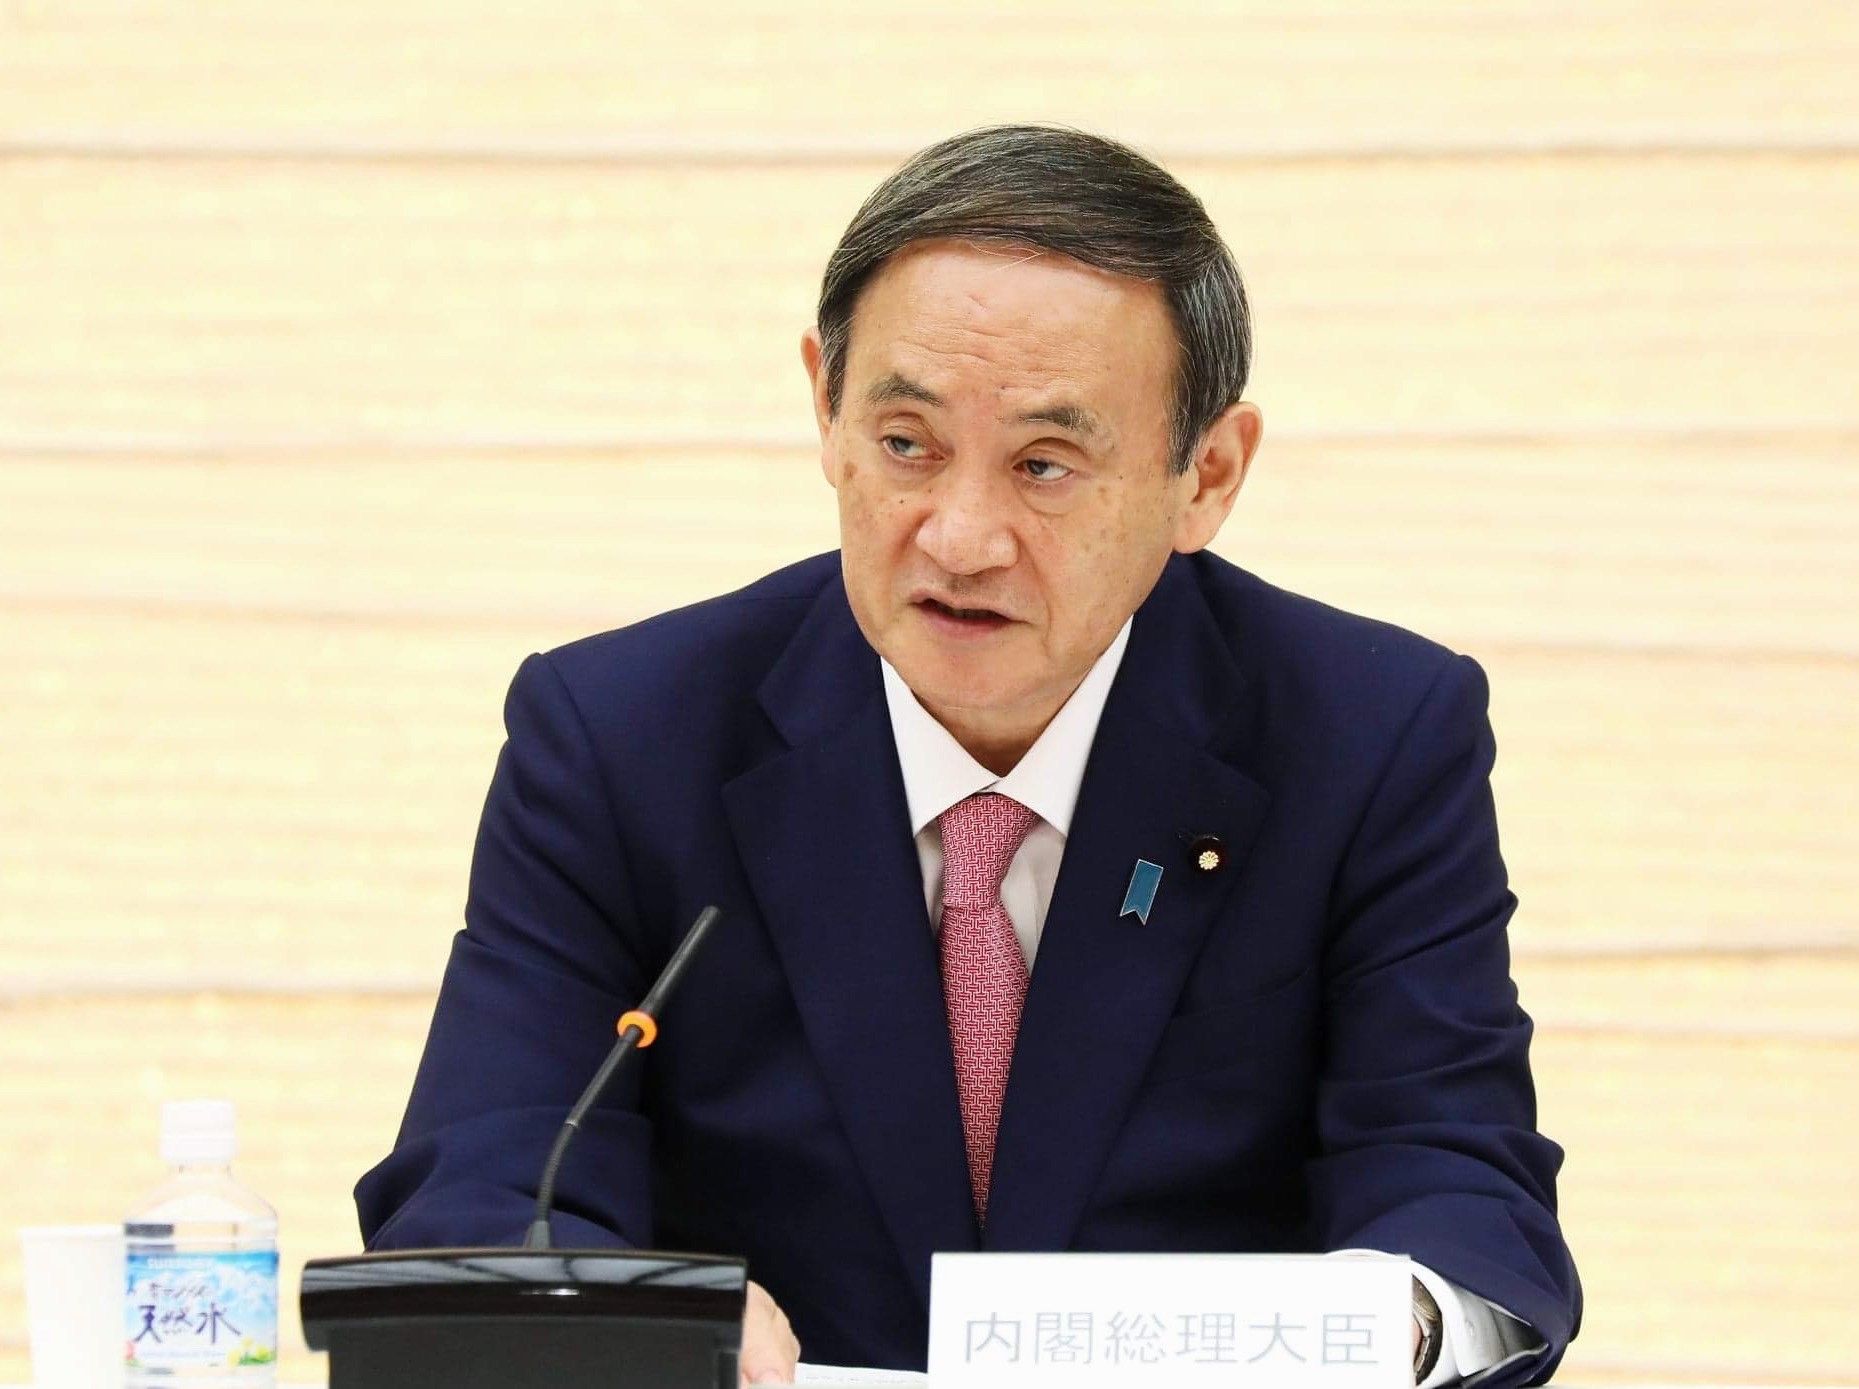 Japan PM Yoshihide Suga sets 2050 deadline for carbon neutrality